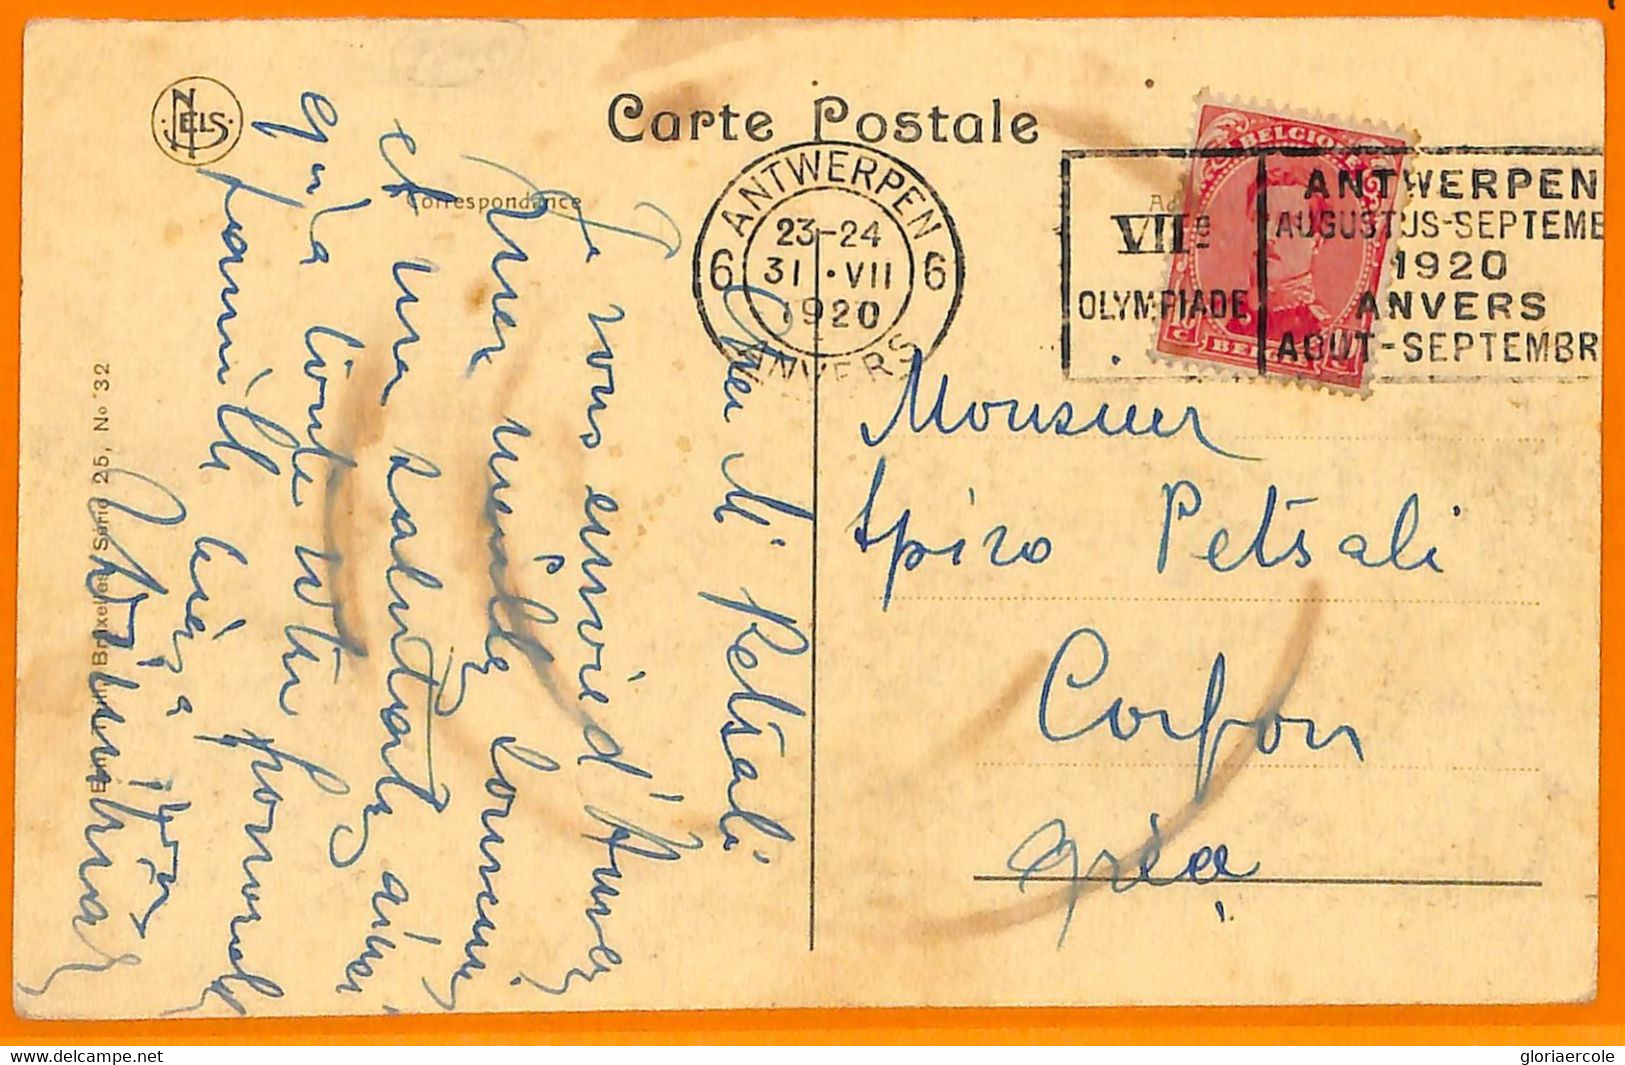 Aa2943 - BELGIUM - POSTAL HISTORY - 1920 Olympic Postmark On POSTCARD To GREECE - Summer 1920: Antwerp